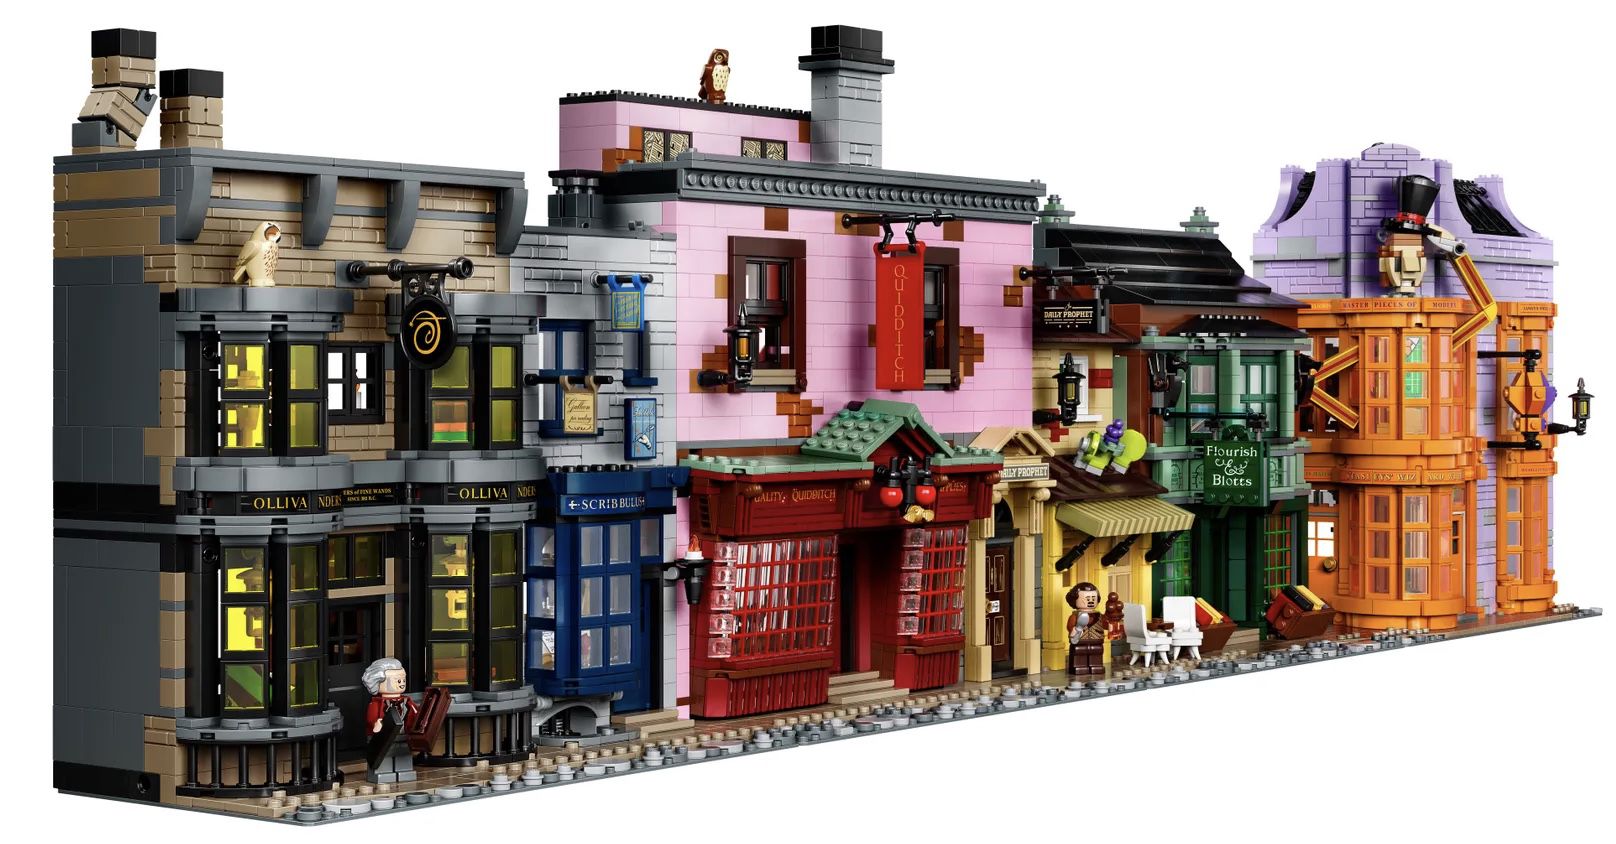 LEGO Harry Potter   Winkelgasse (75978) für 399,99€ (statt 475€)